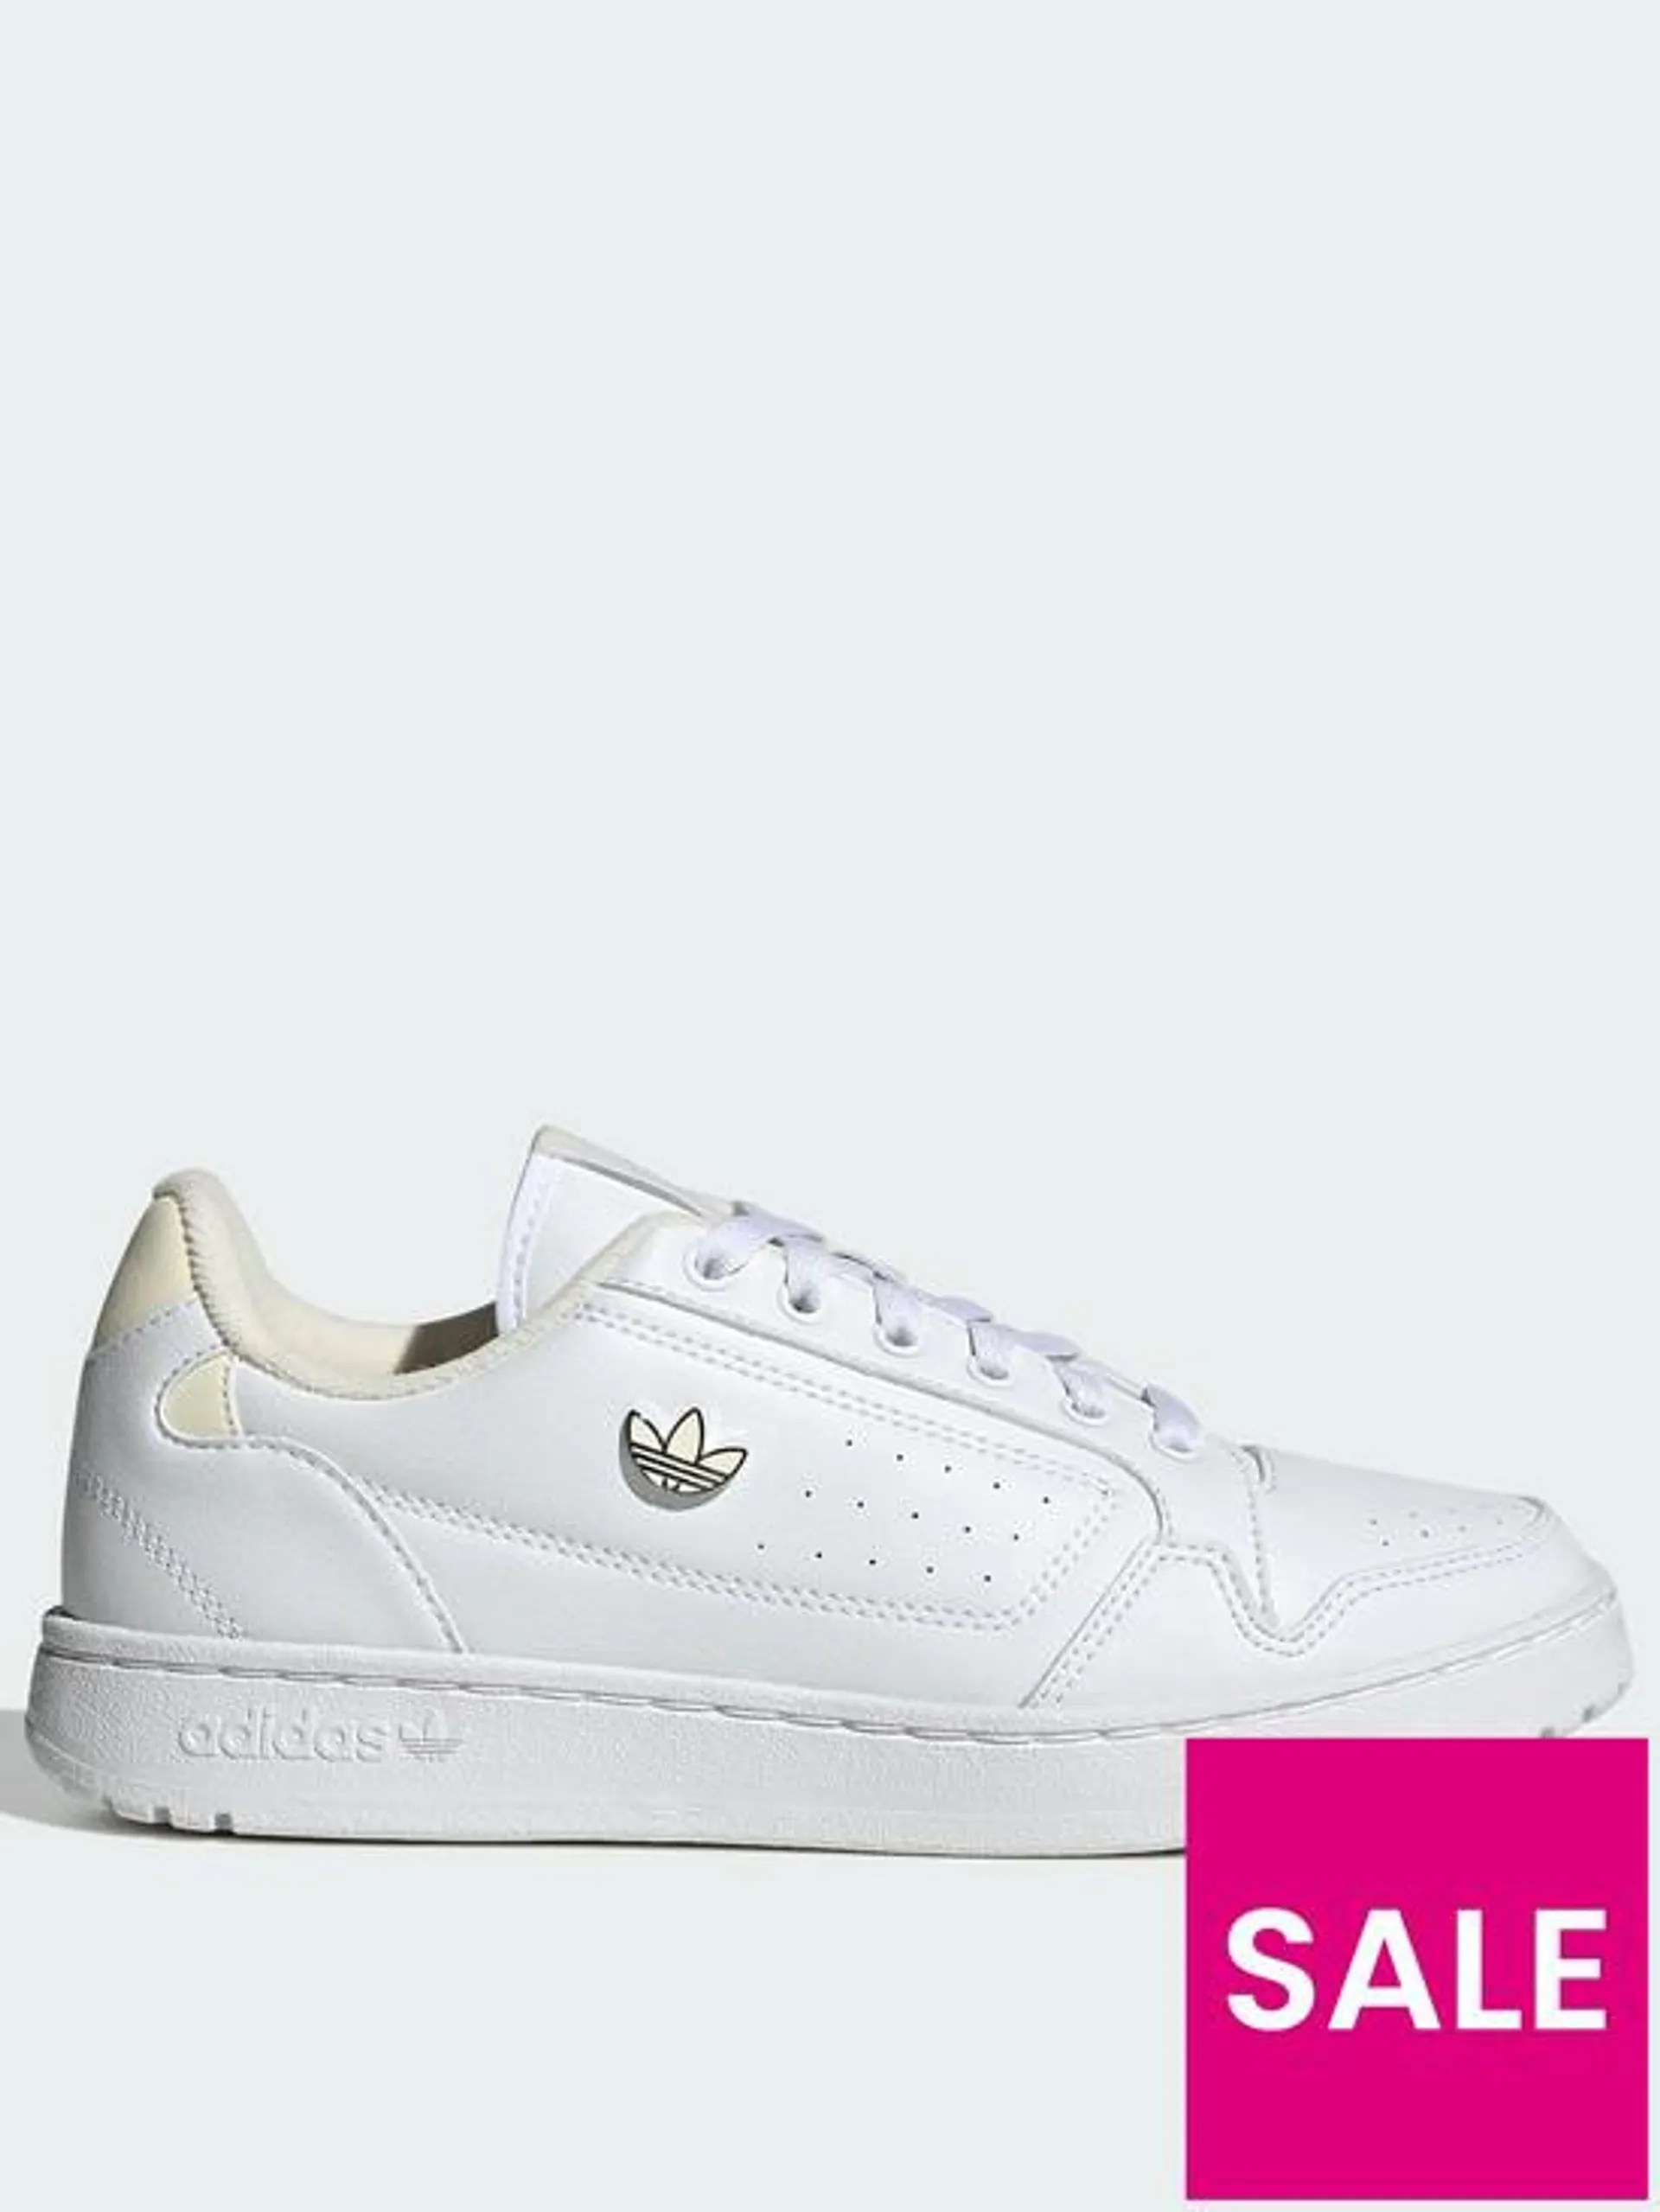 adidas Originals NY 90 - White/Cream